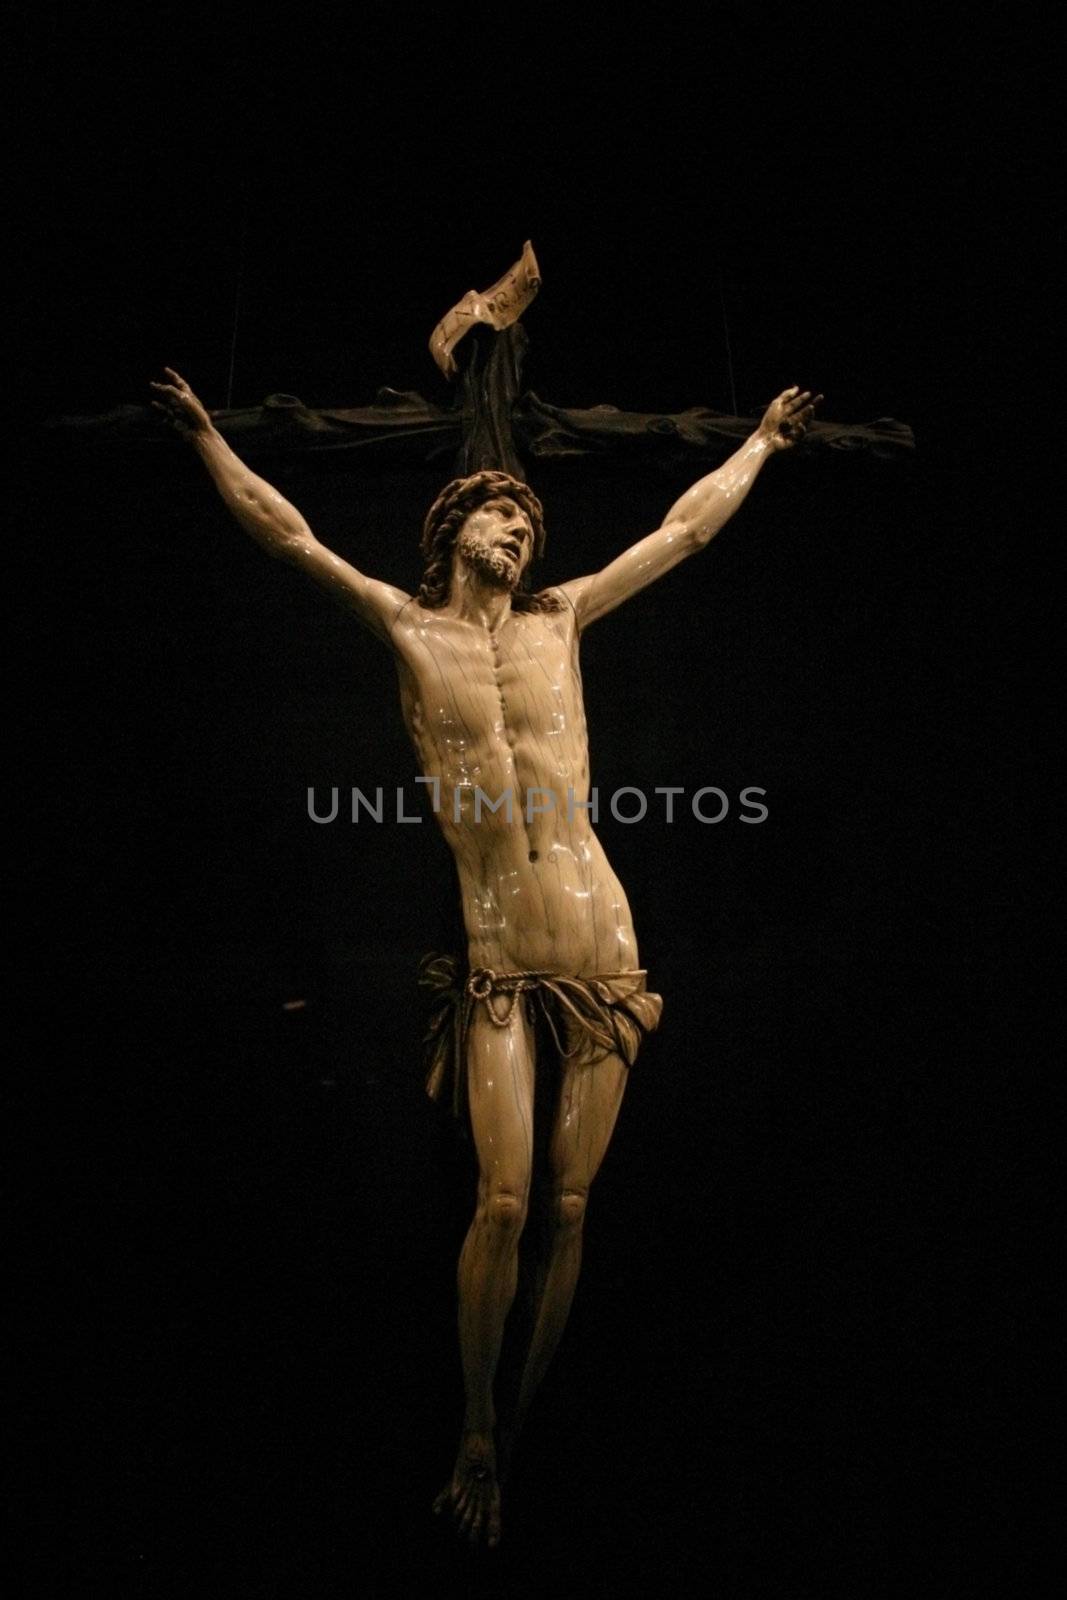 crucifix against black background